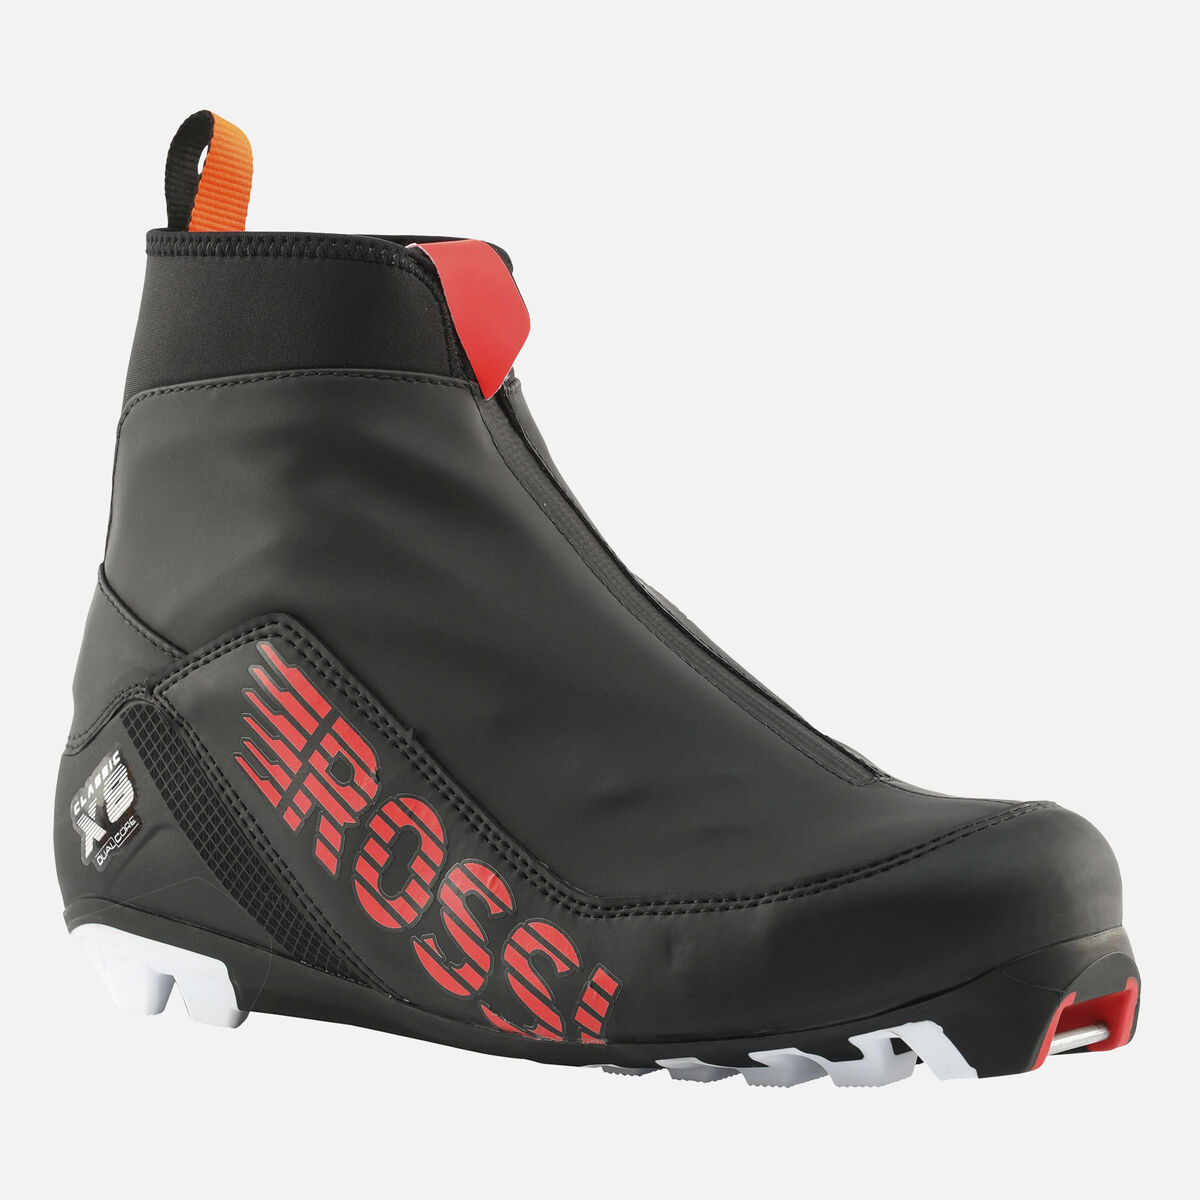 Rossignol Men's Race Classic Nordic Boots X-8 